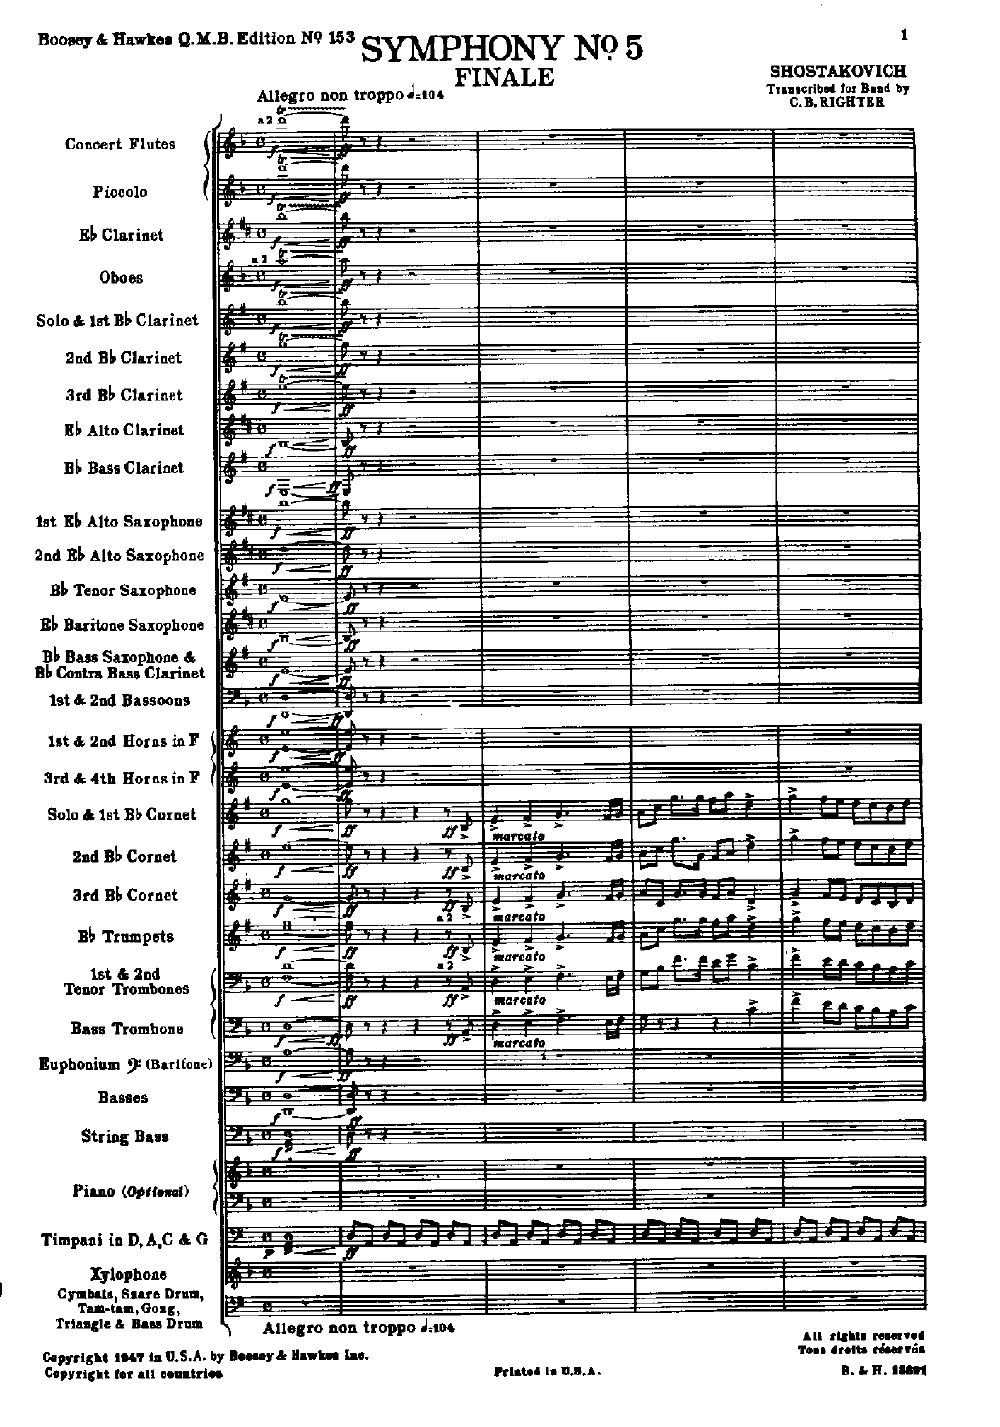 Shostakovich symphony 5 bernstein